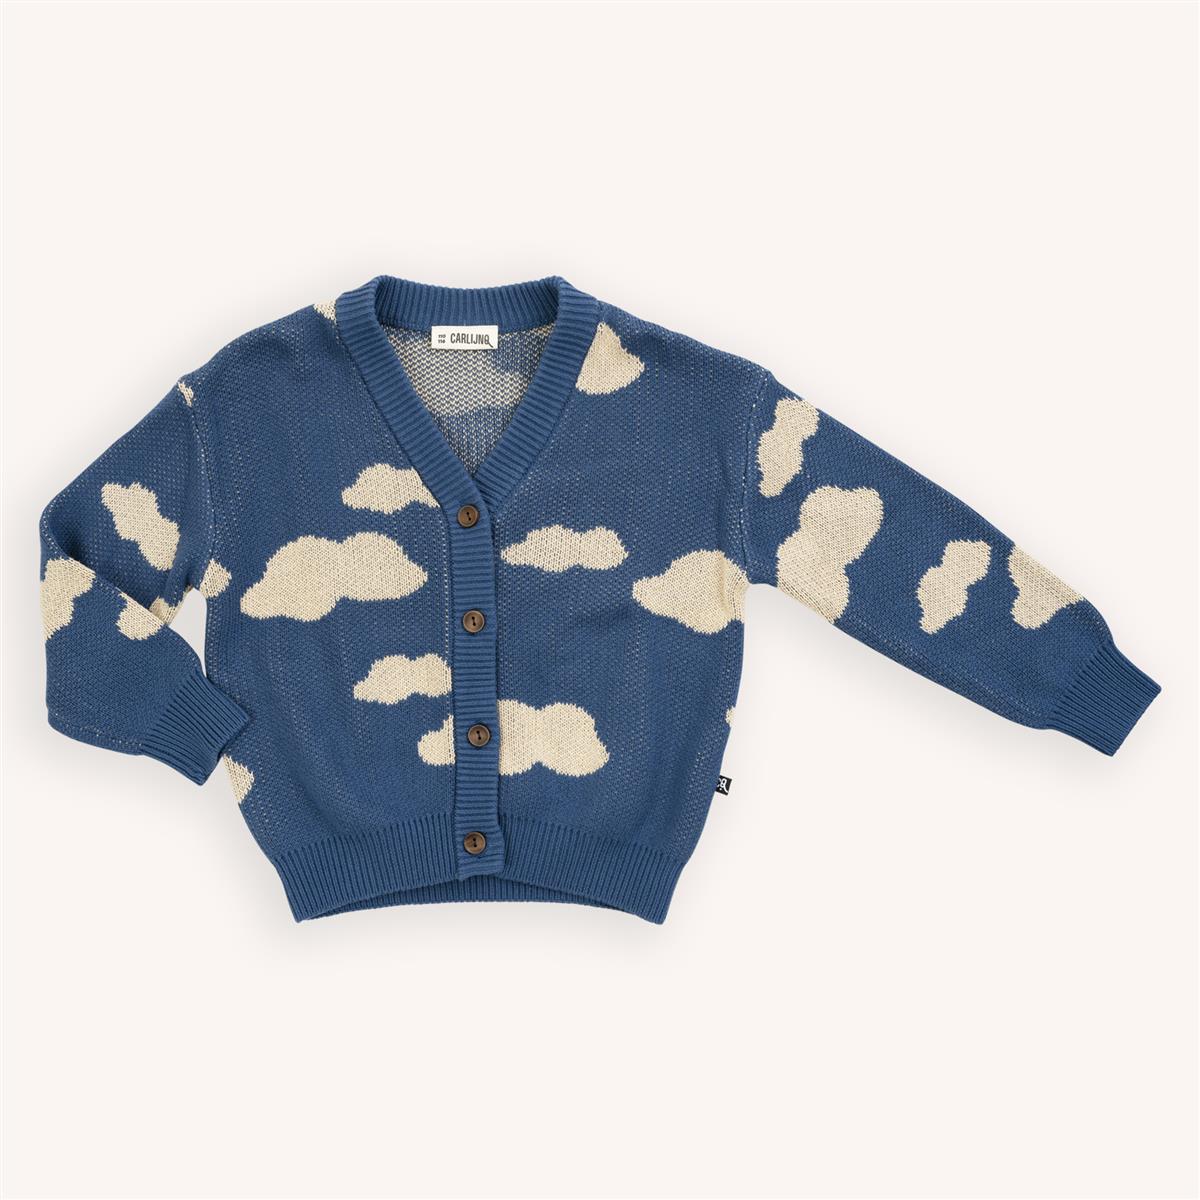 CARLIJNQ - Clouds - Cardigan (Knit)